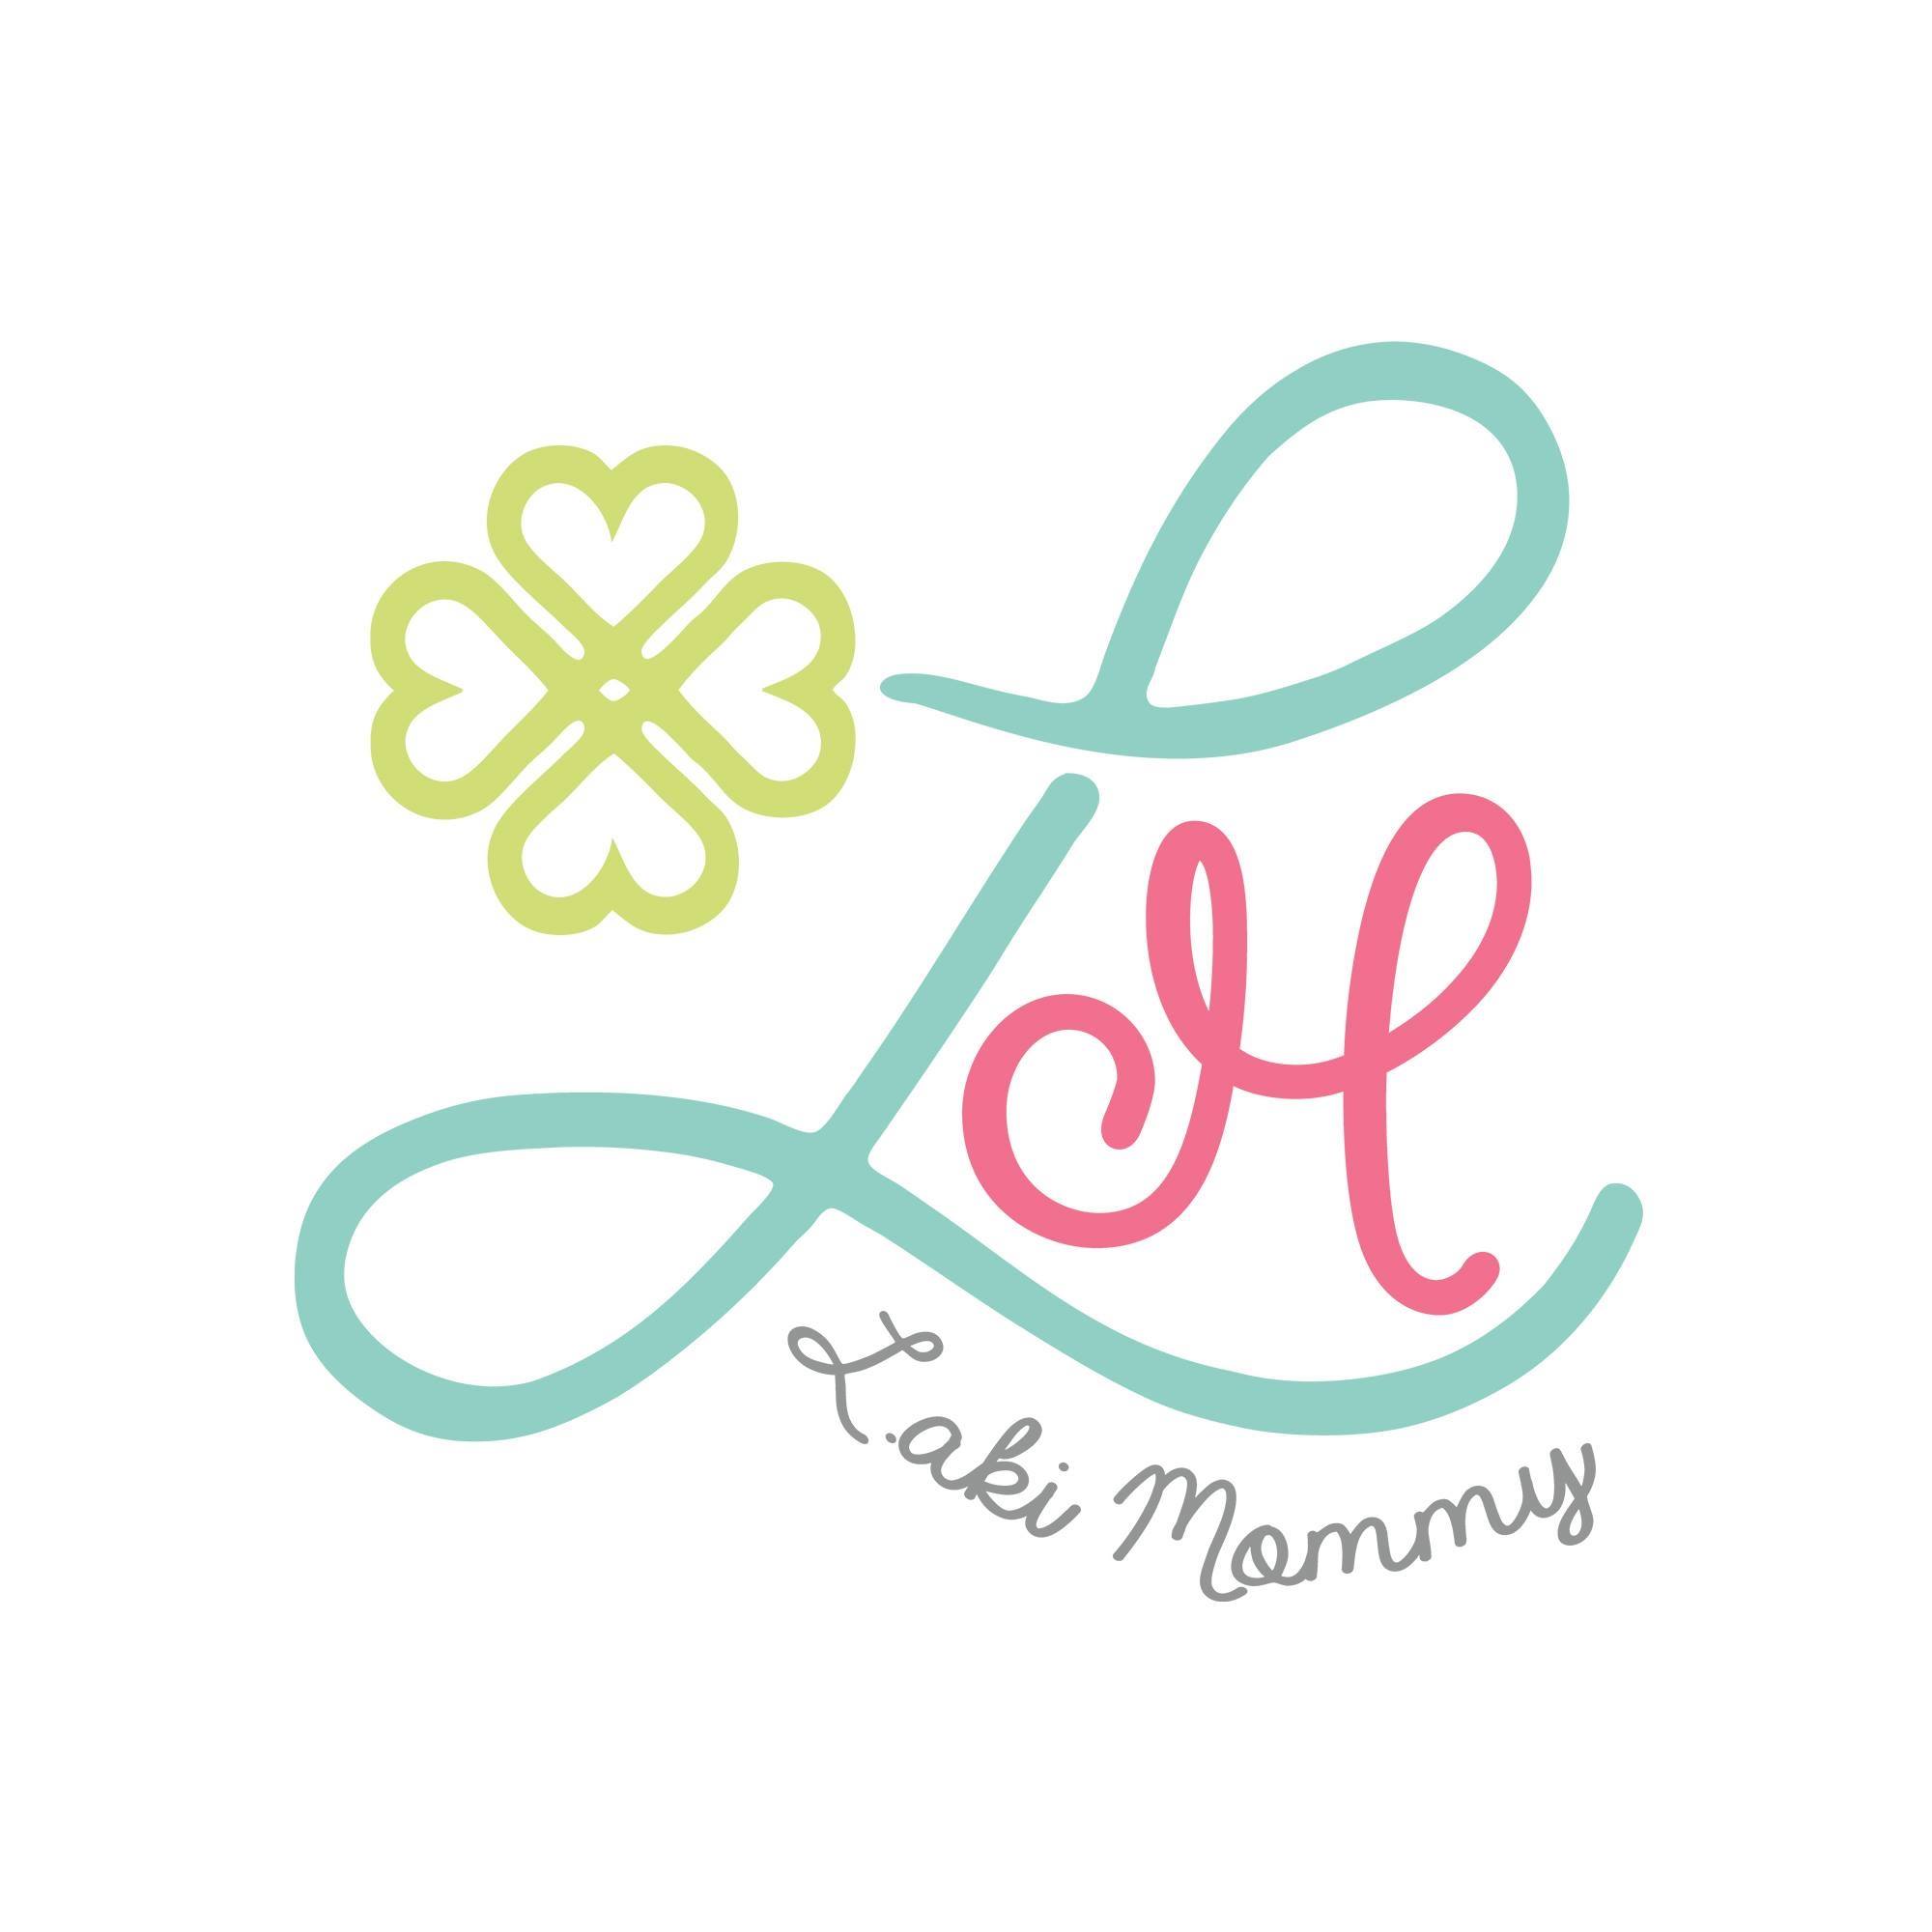 L.AKI MOMMY logo